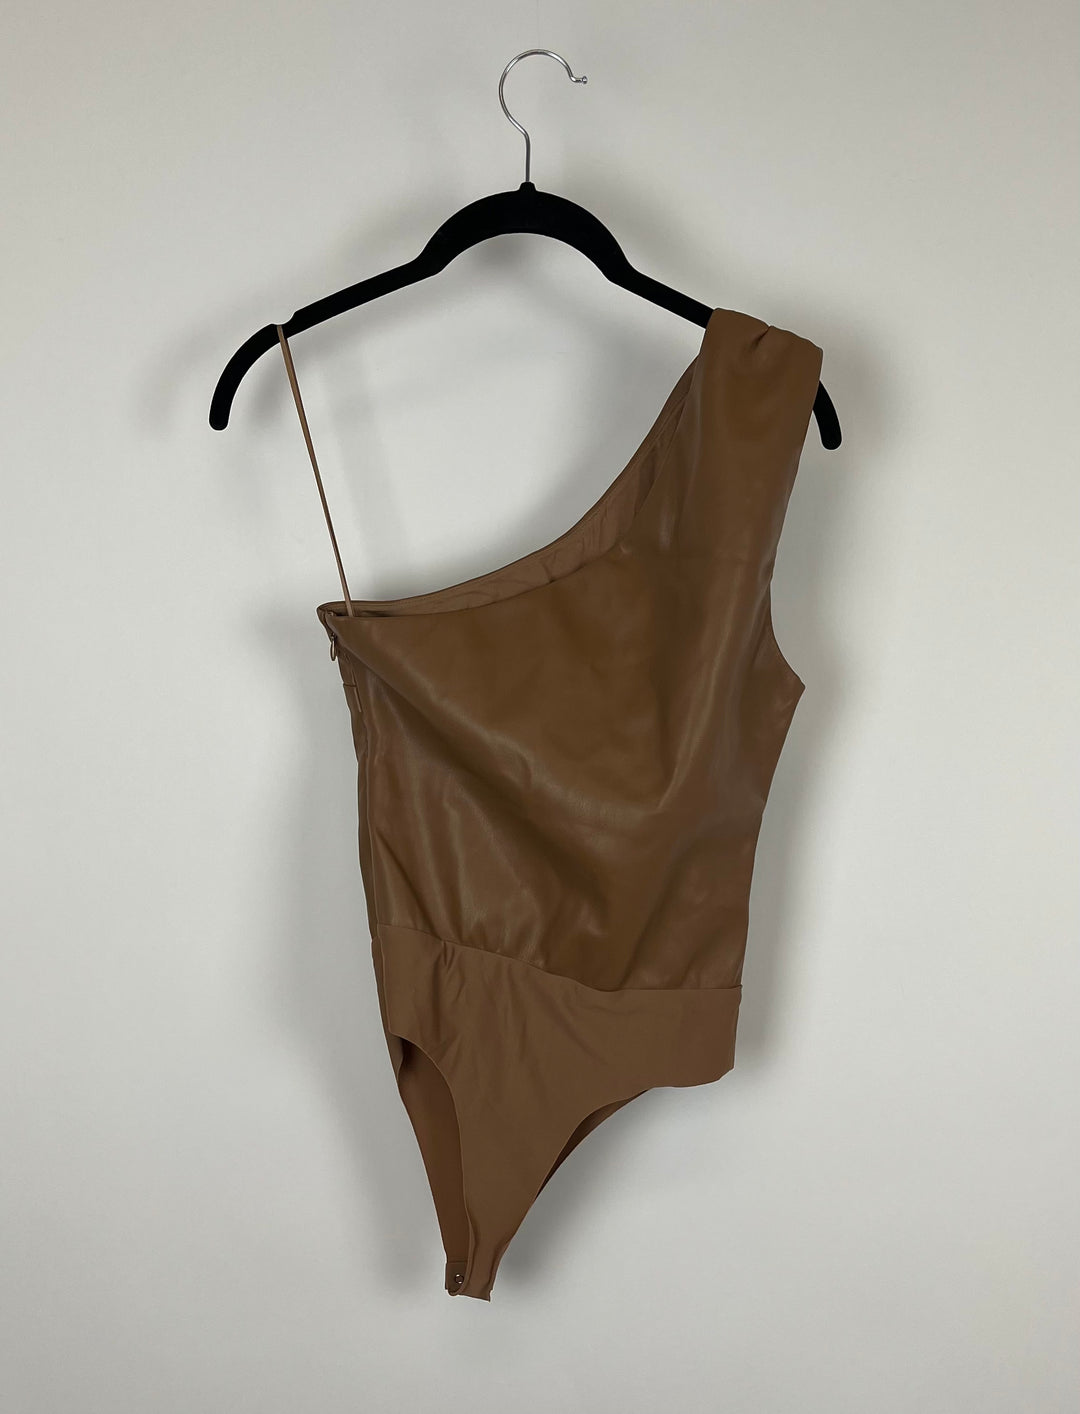 Caramel Brown One Shoulder Bodysuit - Size 0-2 and 2-4